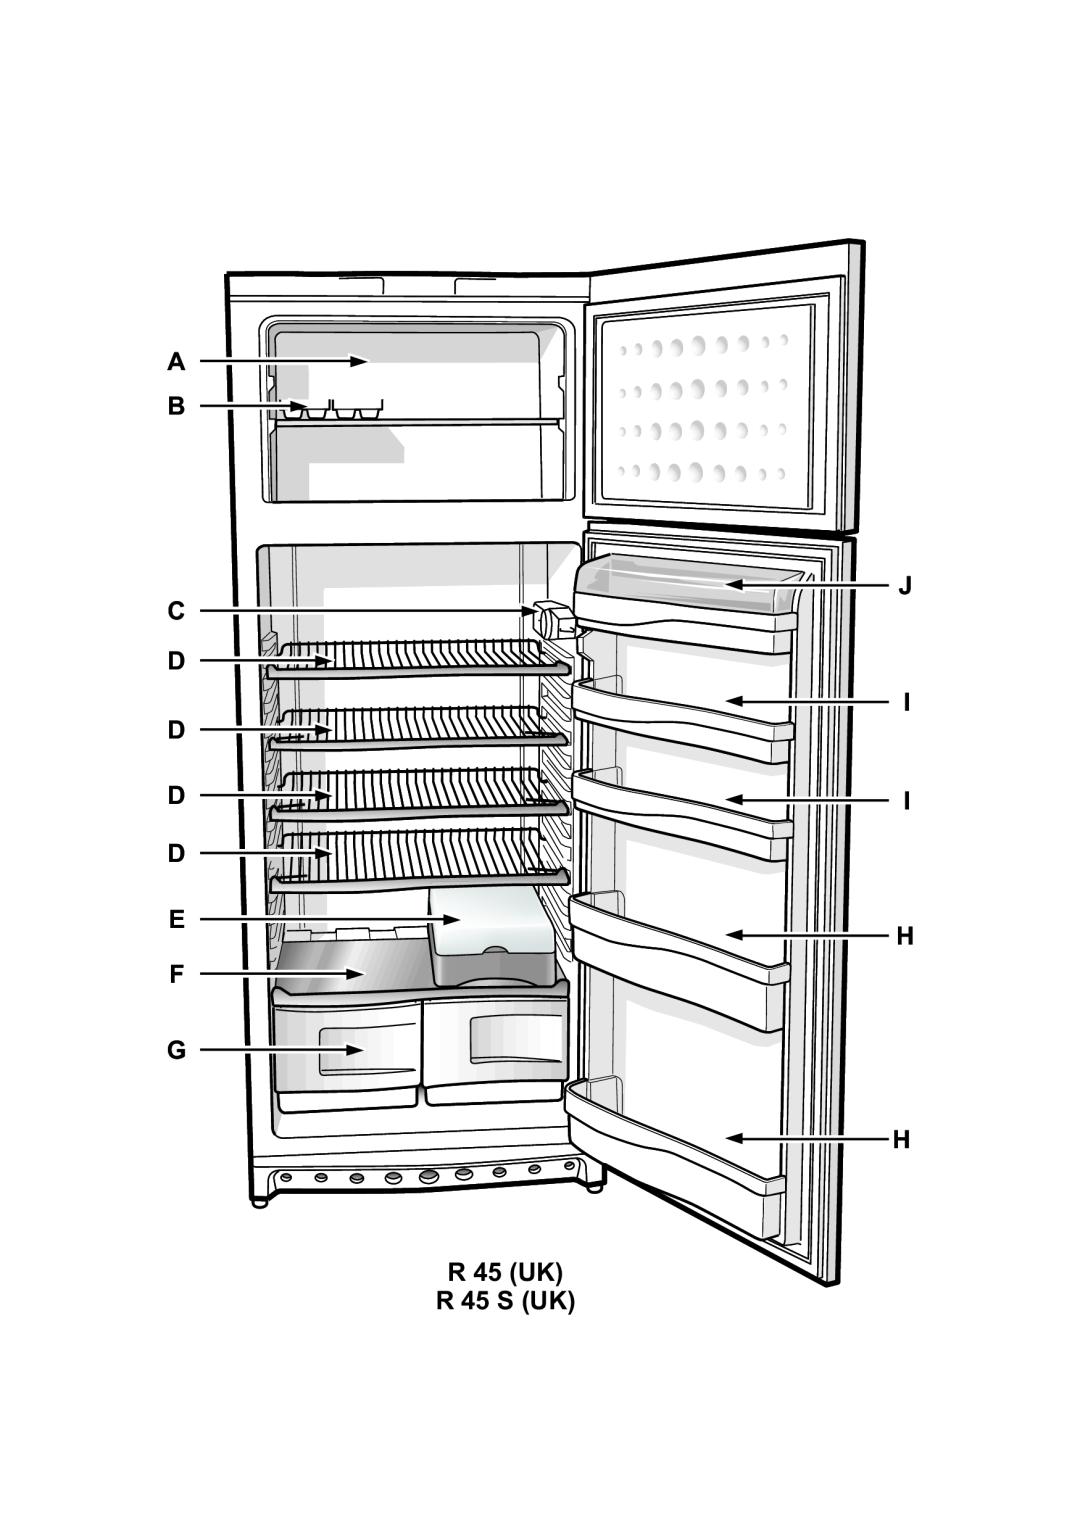 Indesit Two-Door Refrigerator/Freezer manual A B J C D, D E H F G H R 45 UK R 45 S UK 